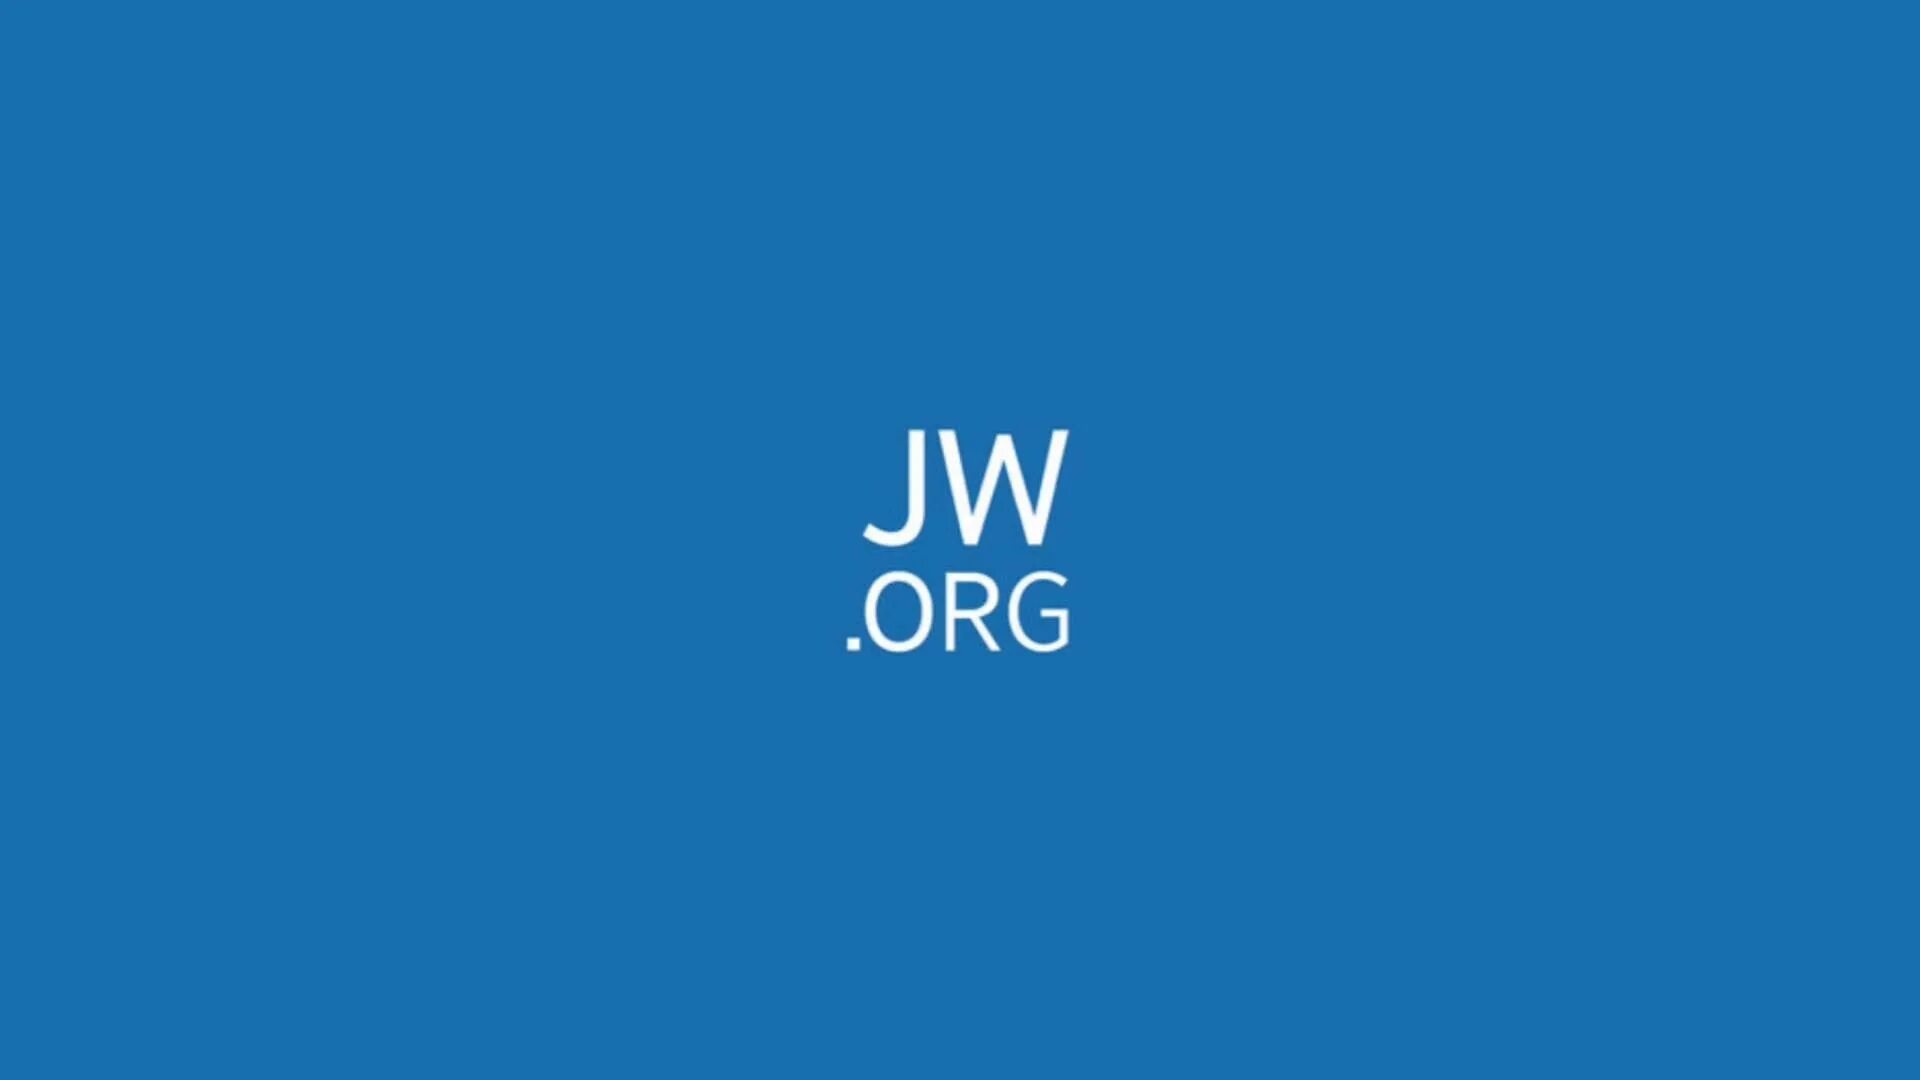 Https jw org. JW org. Эмблема JW. JW.org картинки. Логотип JW.org.